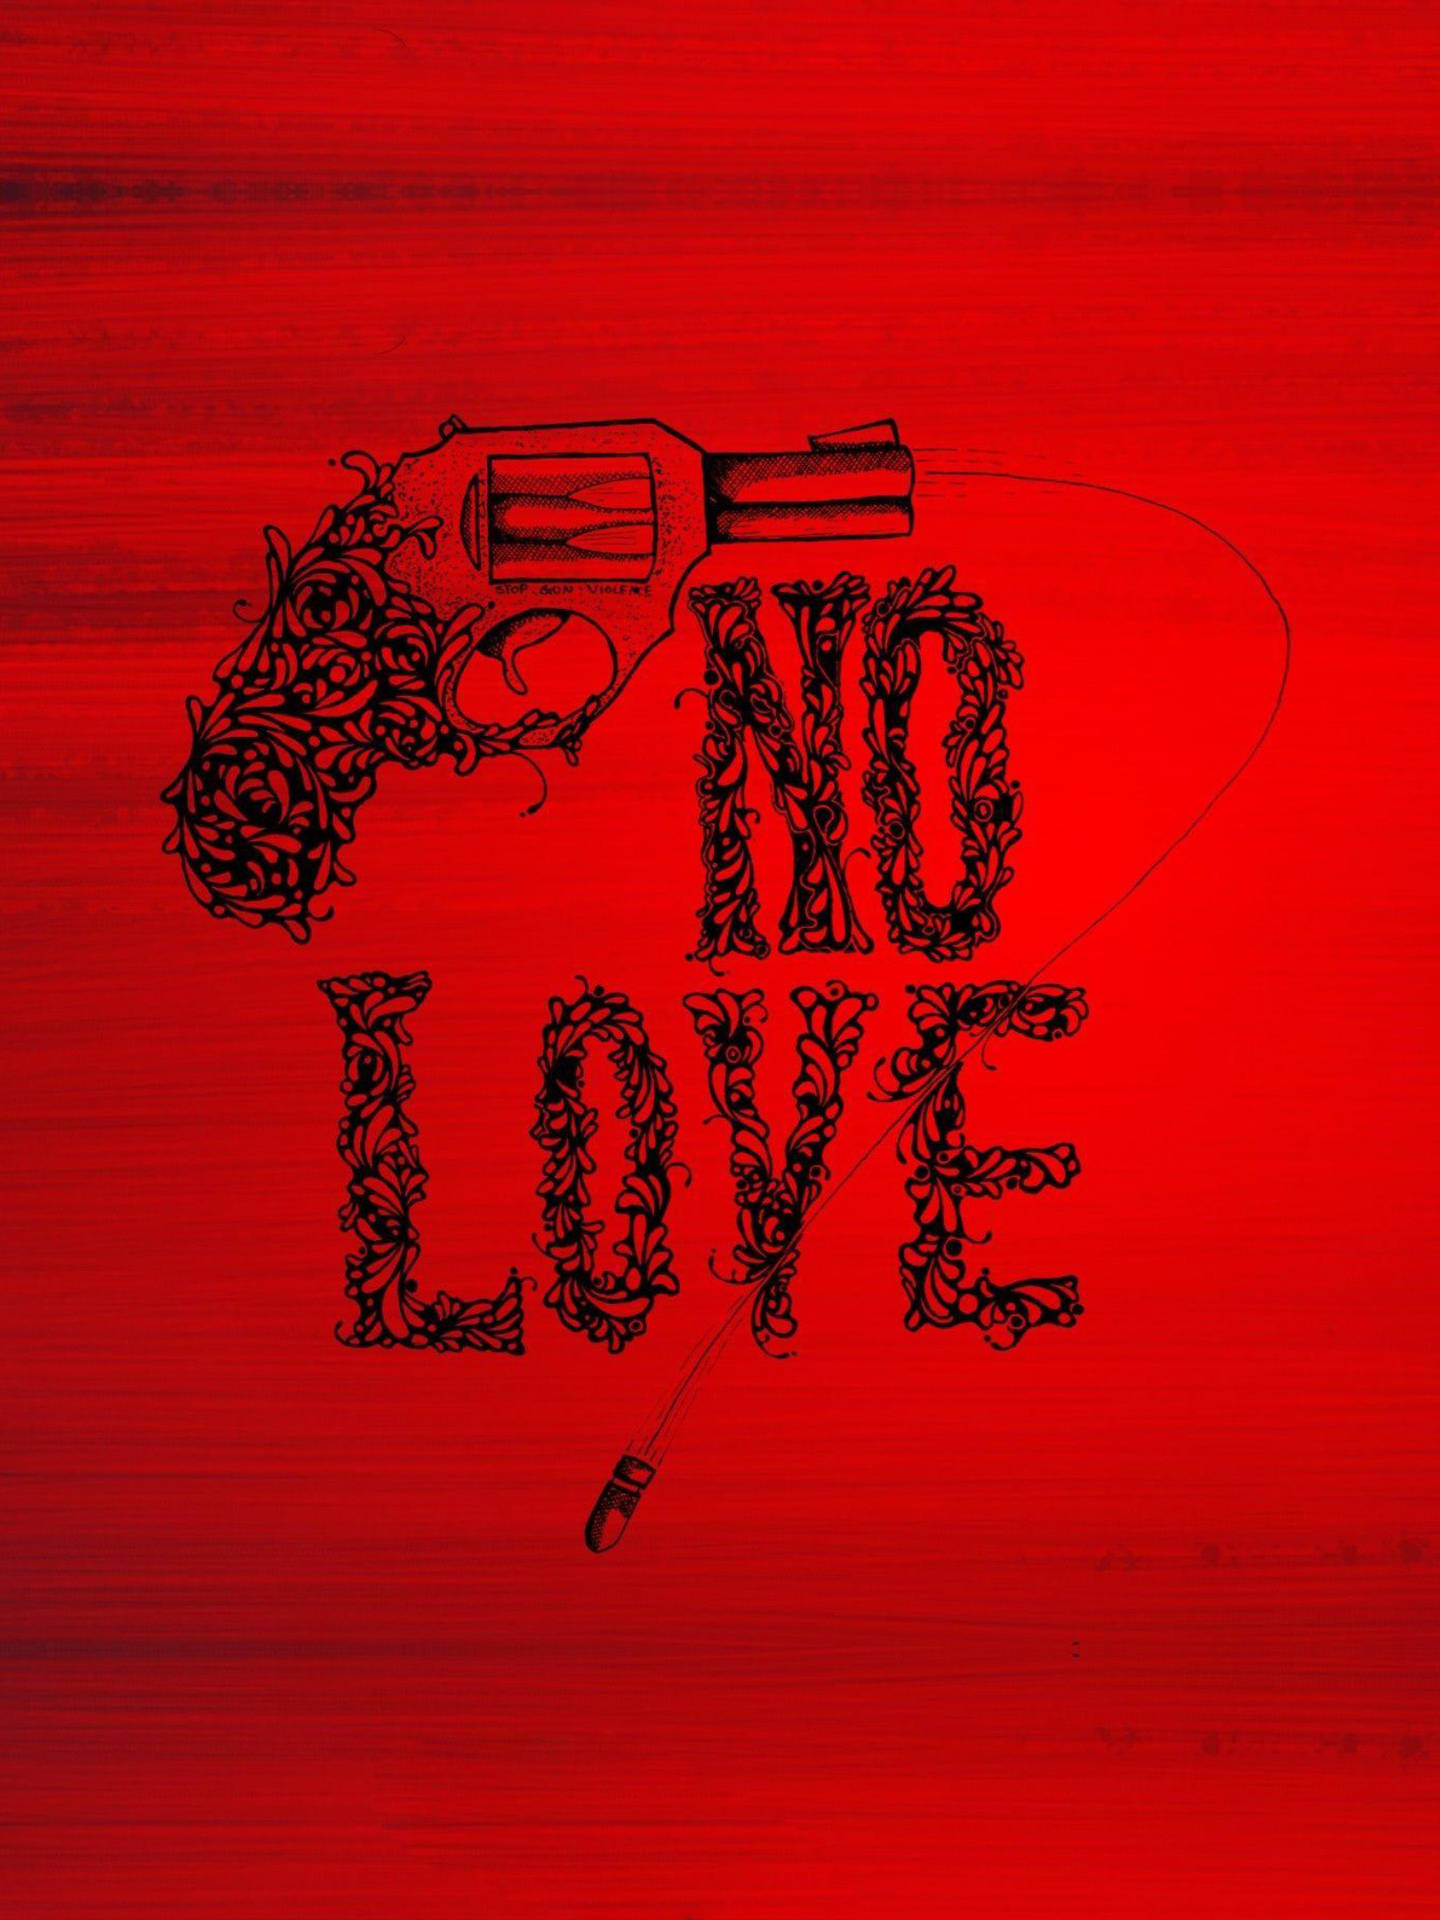 No Love With Revolver Pistol